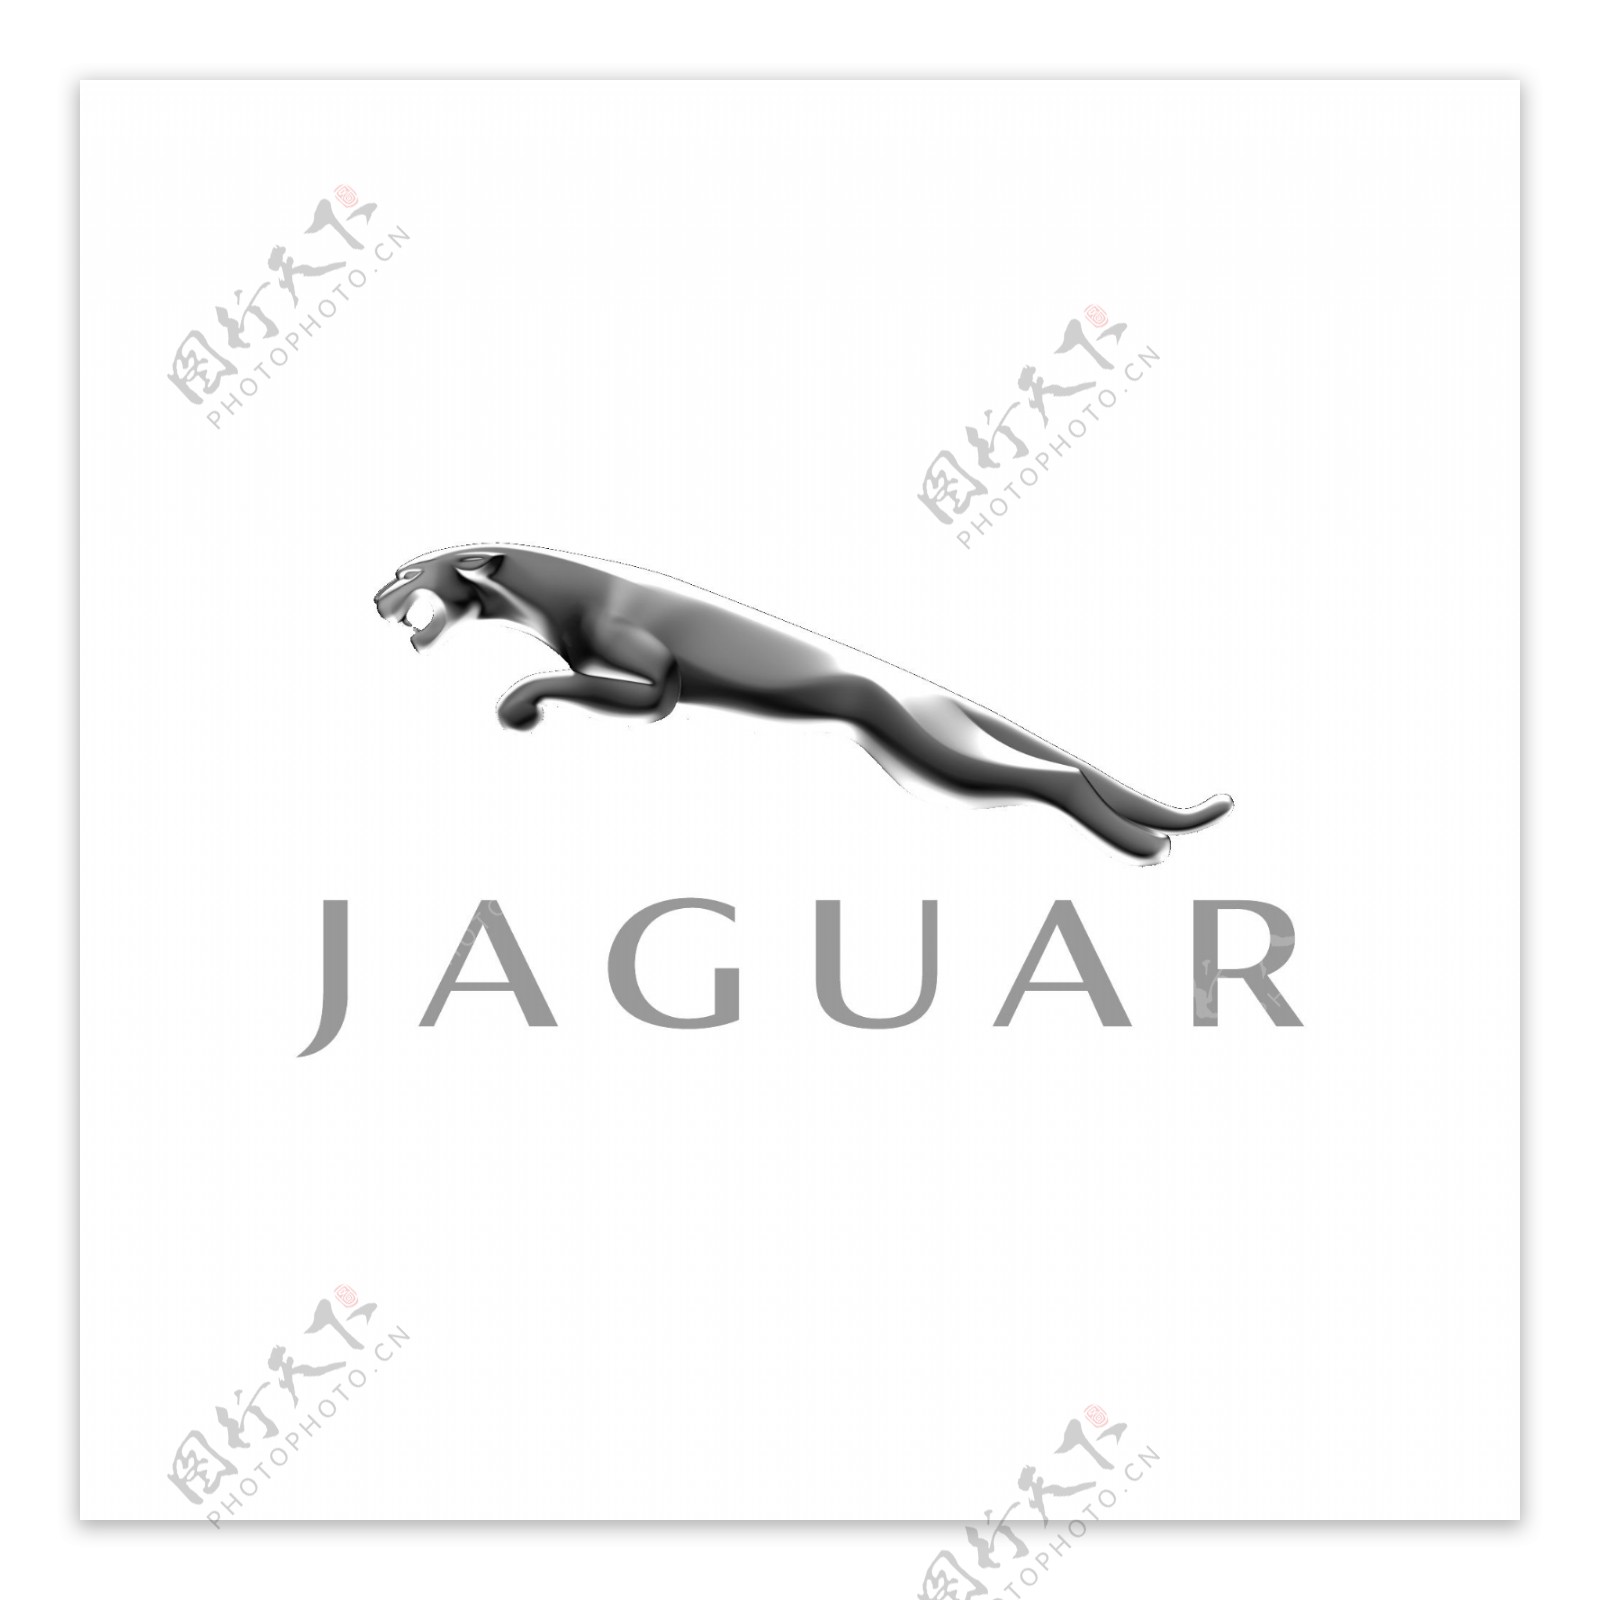 捷豹jaguarlogo